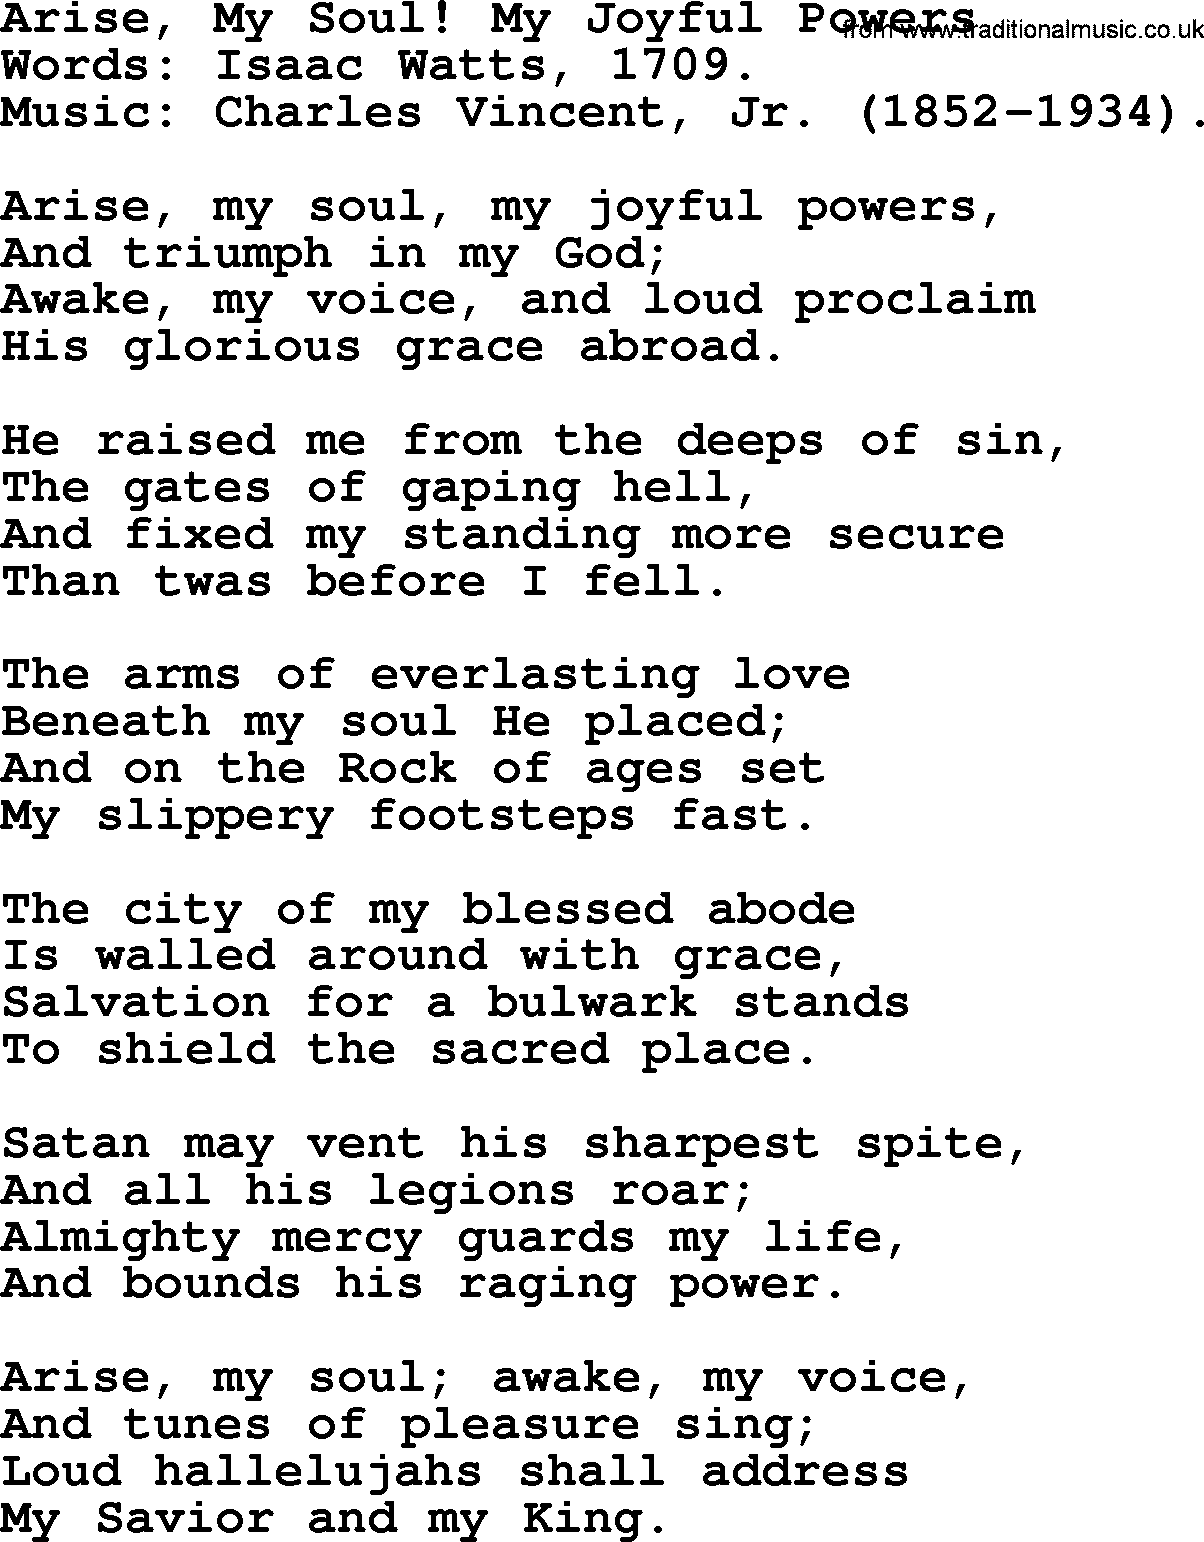 Isaac Watts Christian hymn: Arise, My Soul! My Joyful Powers- lyricss